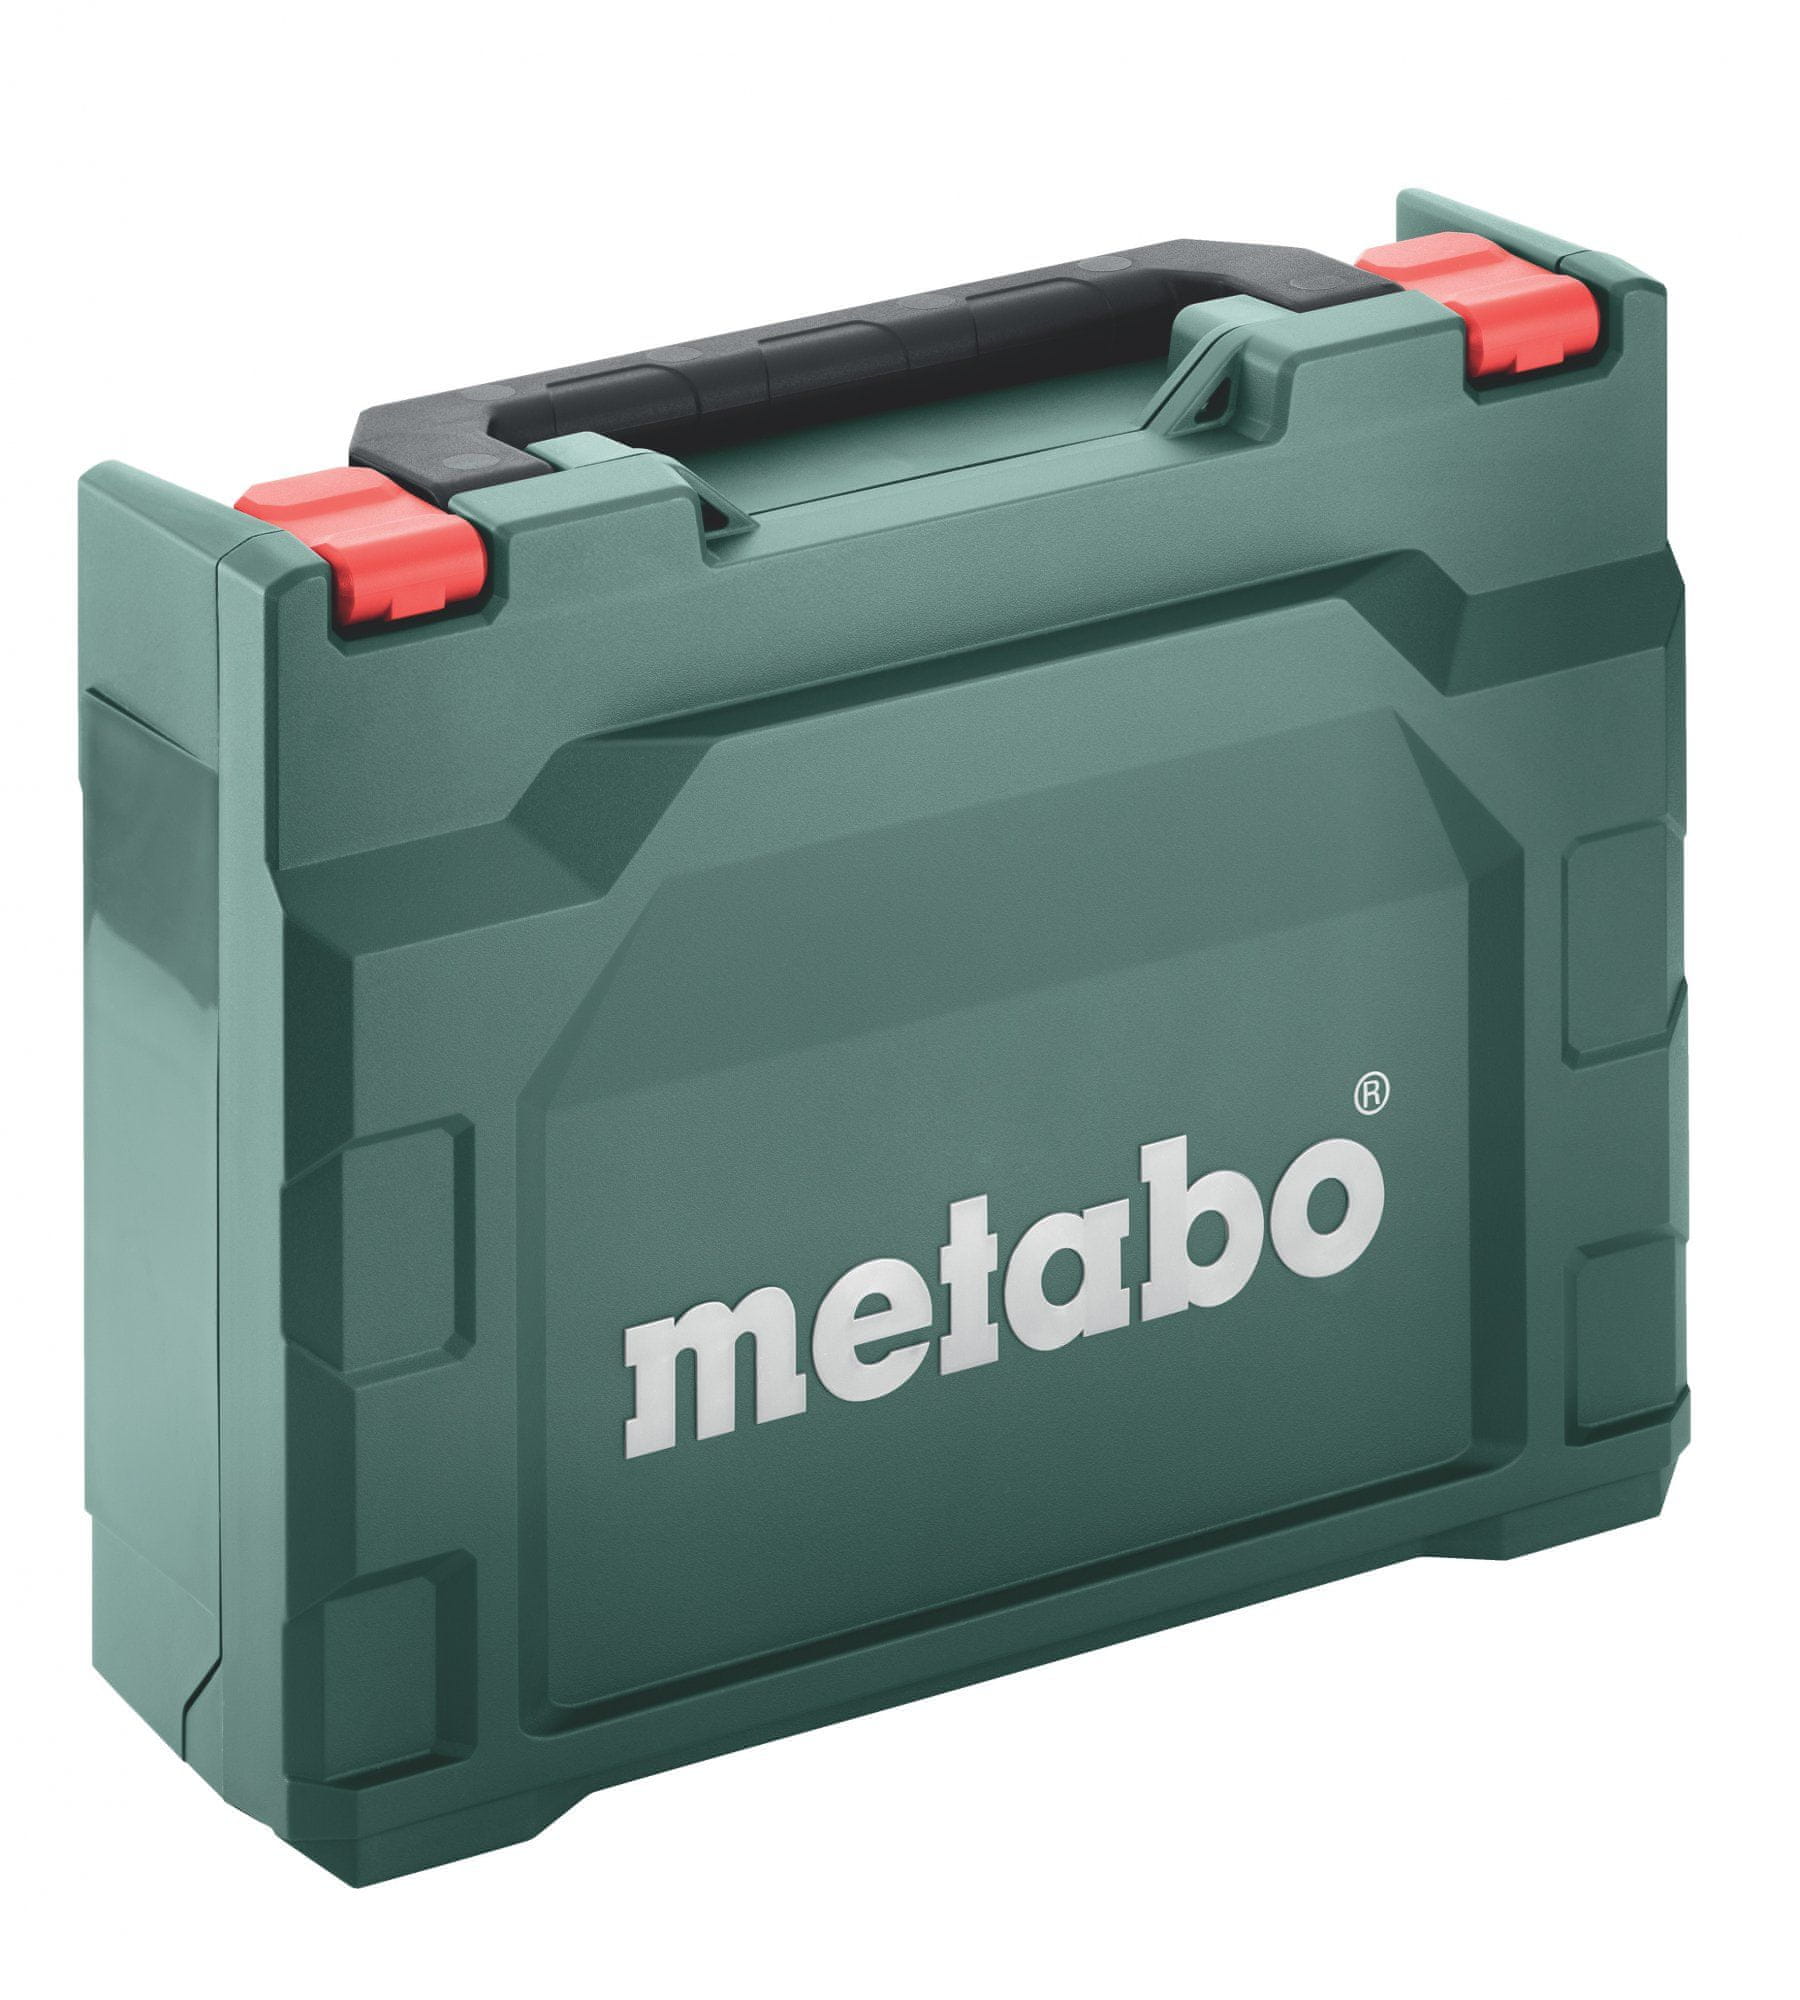 Metabo powermaxx basic 12v. 600984500 Metabo. Metabo POWERMAXX BS 12 кейс. Metabo POWERMAXX BS Basic 600984500. Metabo POWERMAXX Basic.